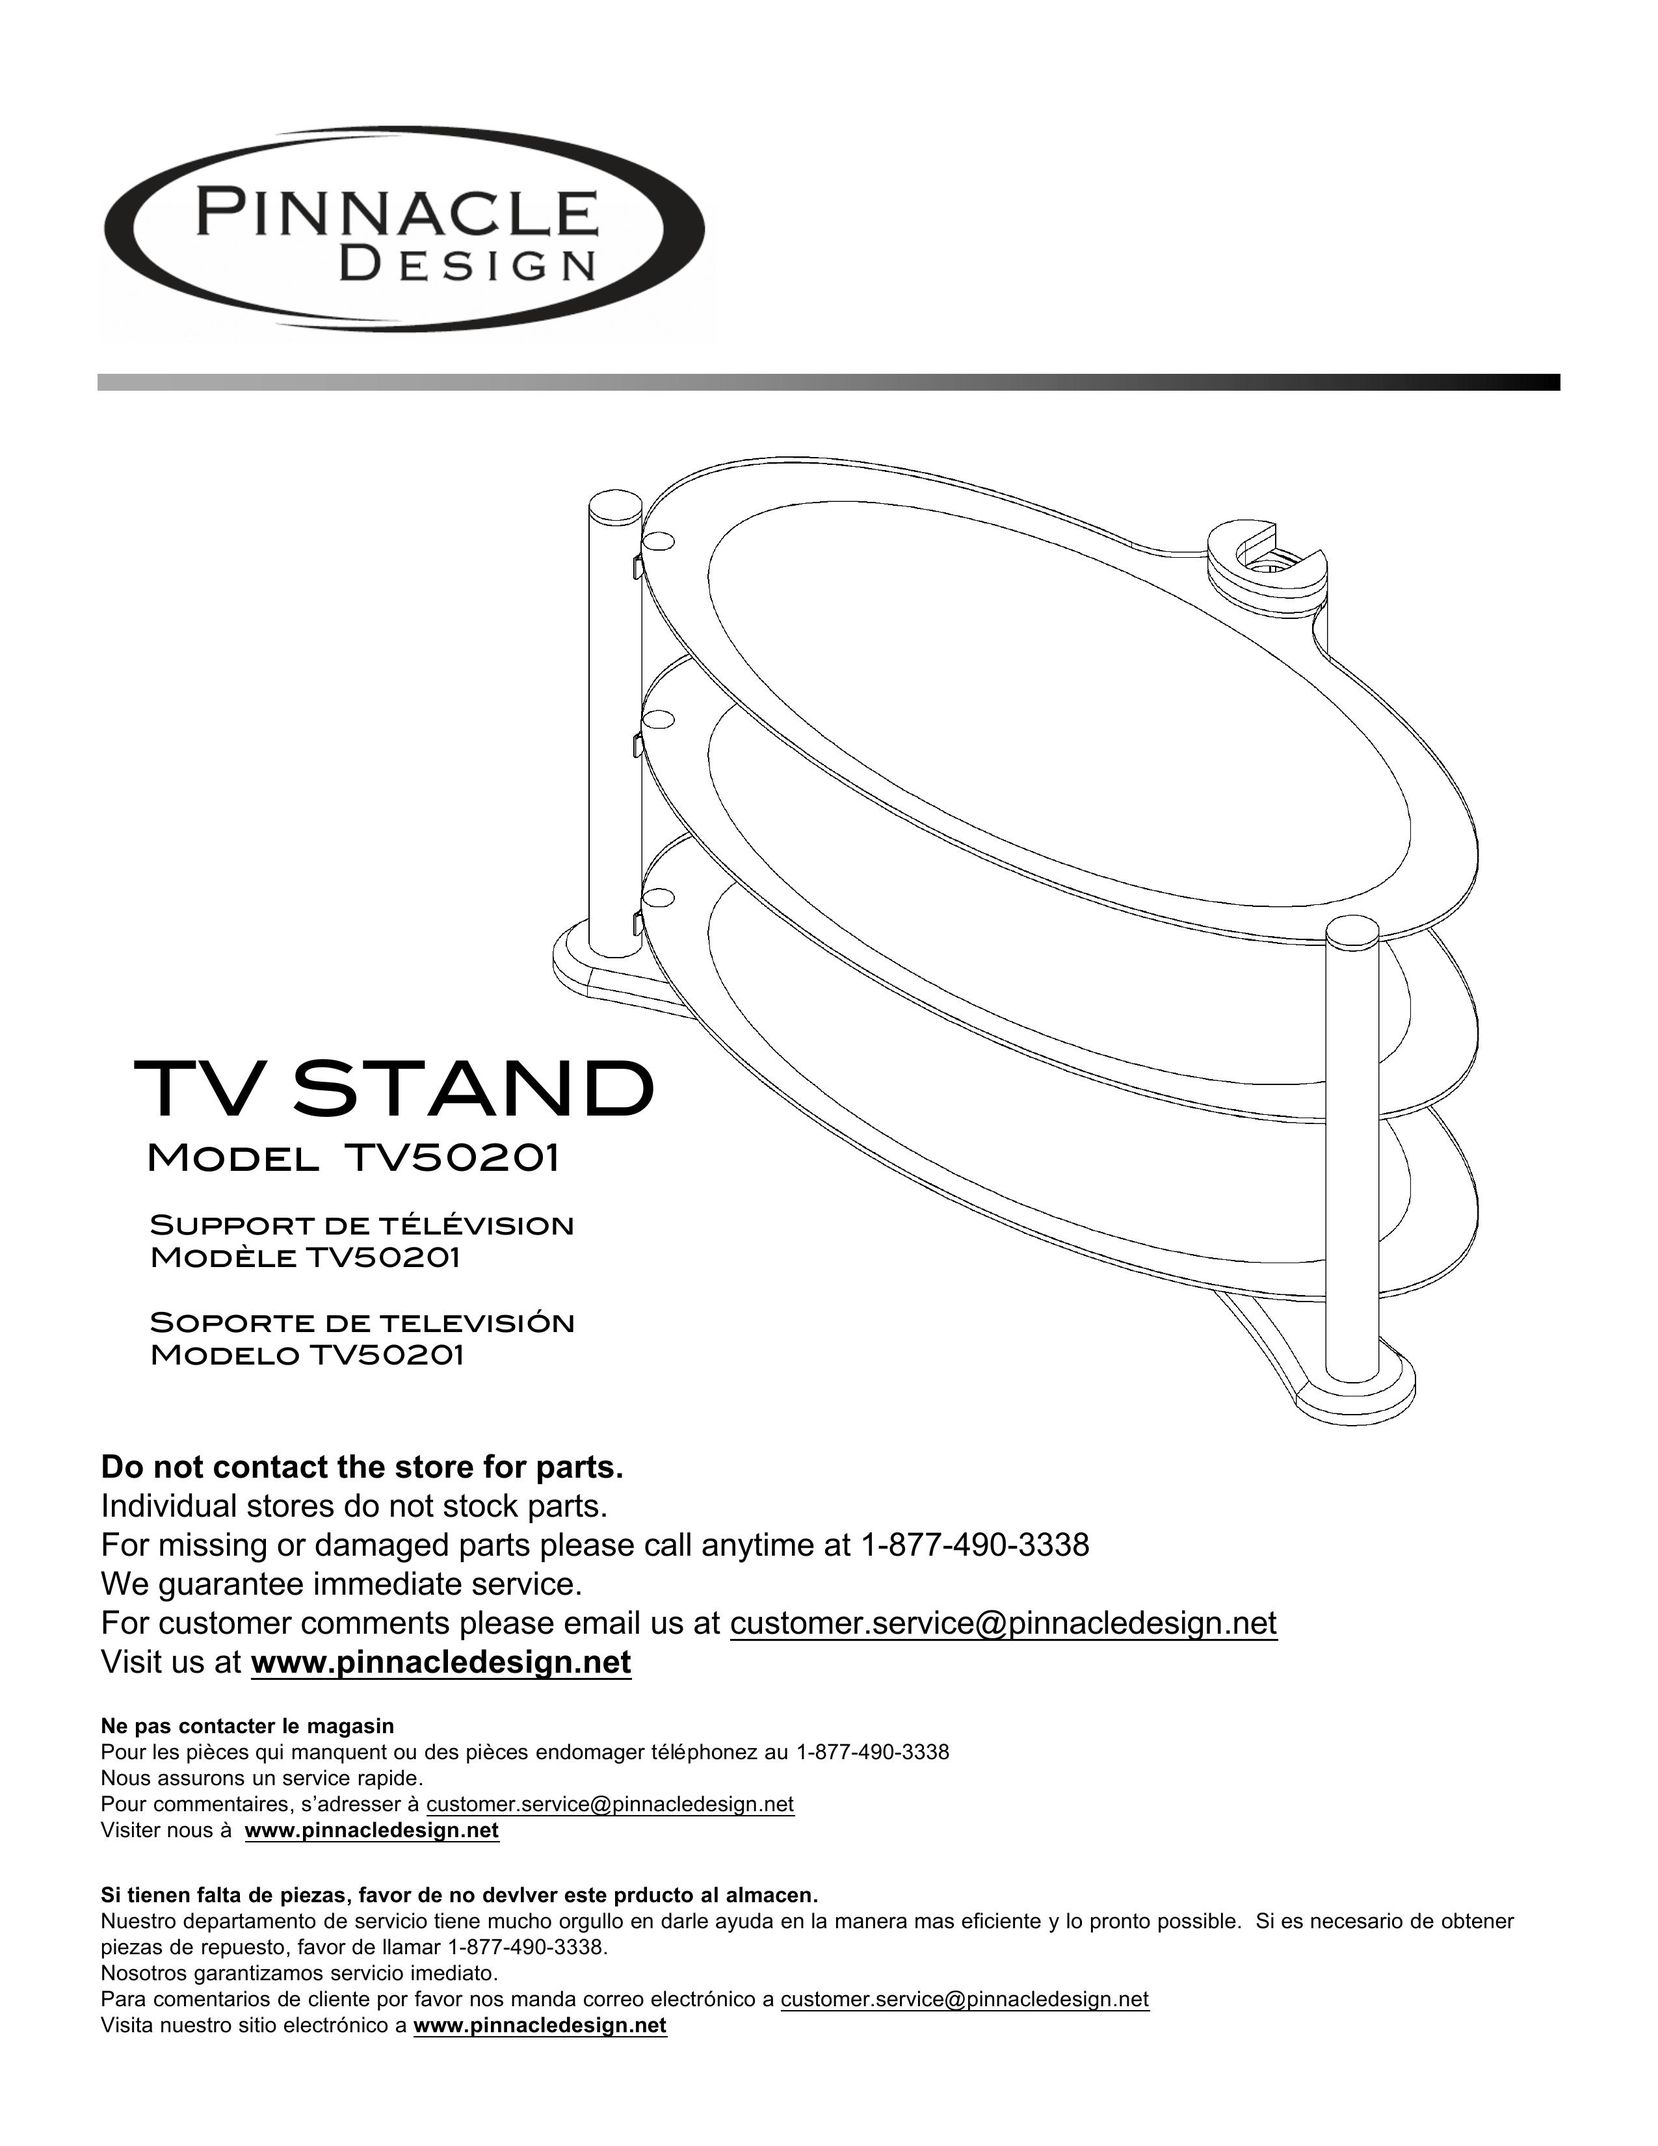 Pinnacle Design TV50201 TV Video Accessories User Manual